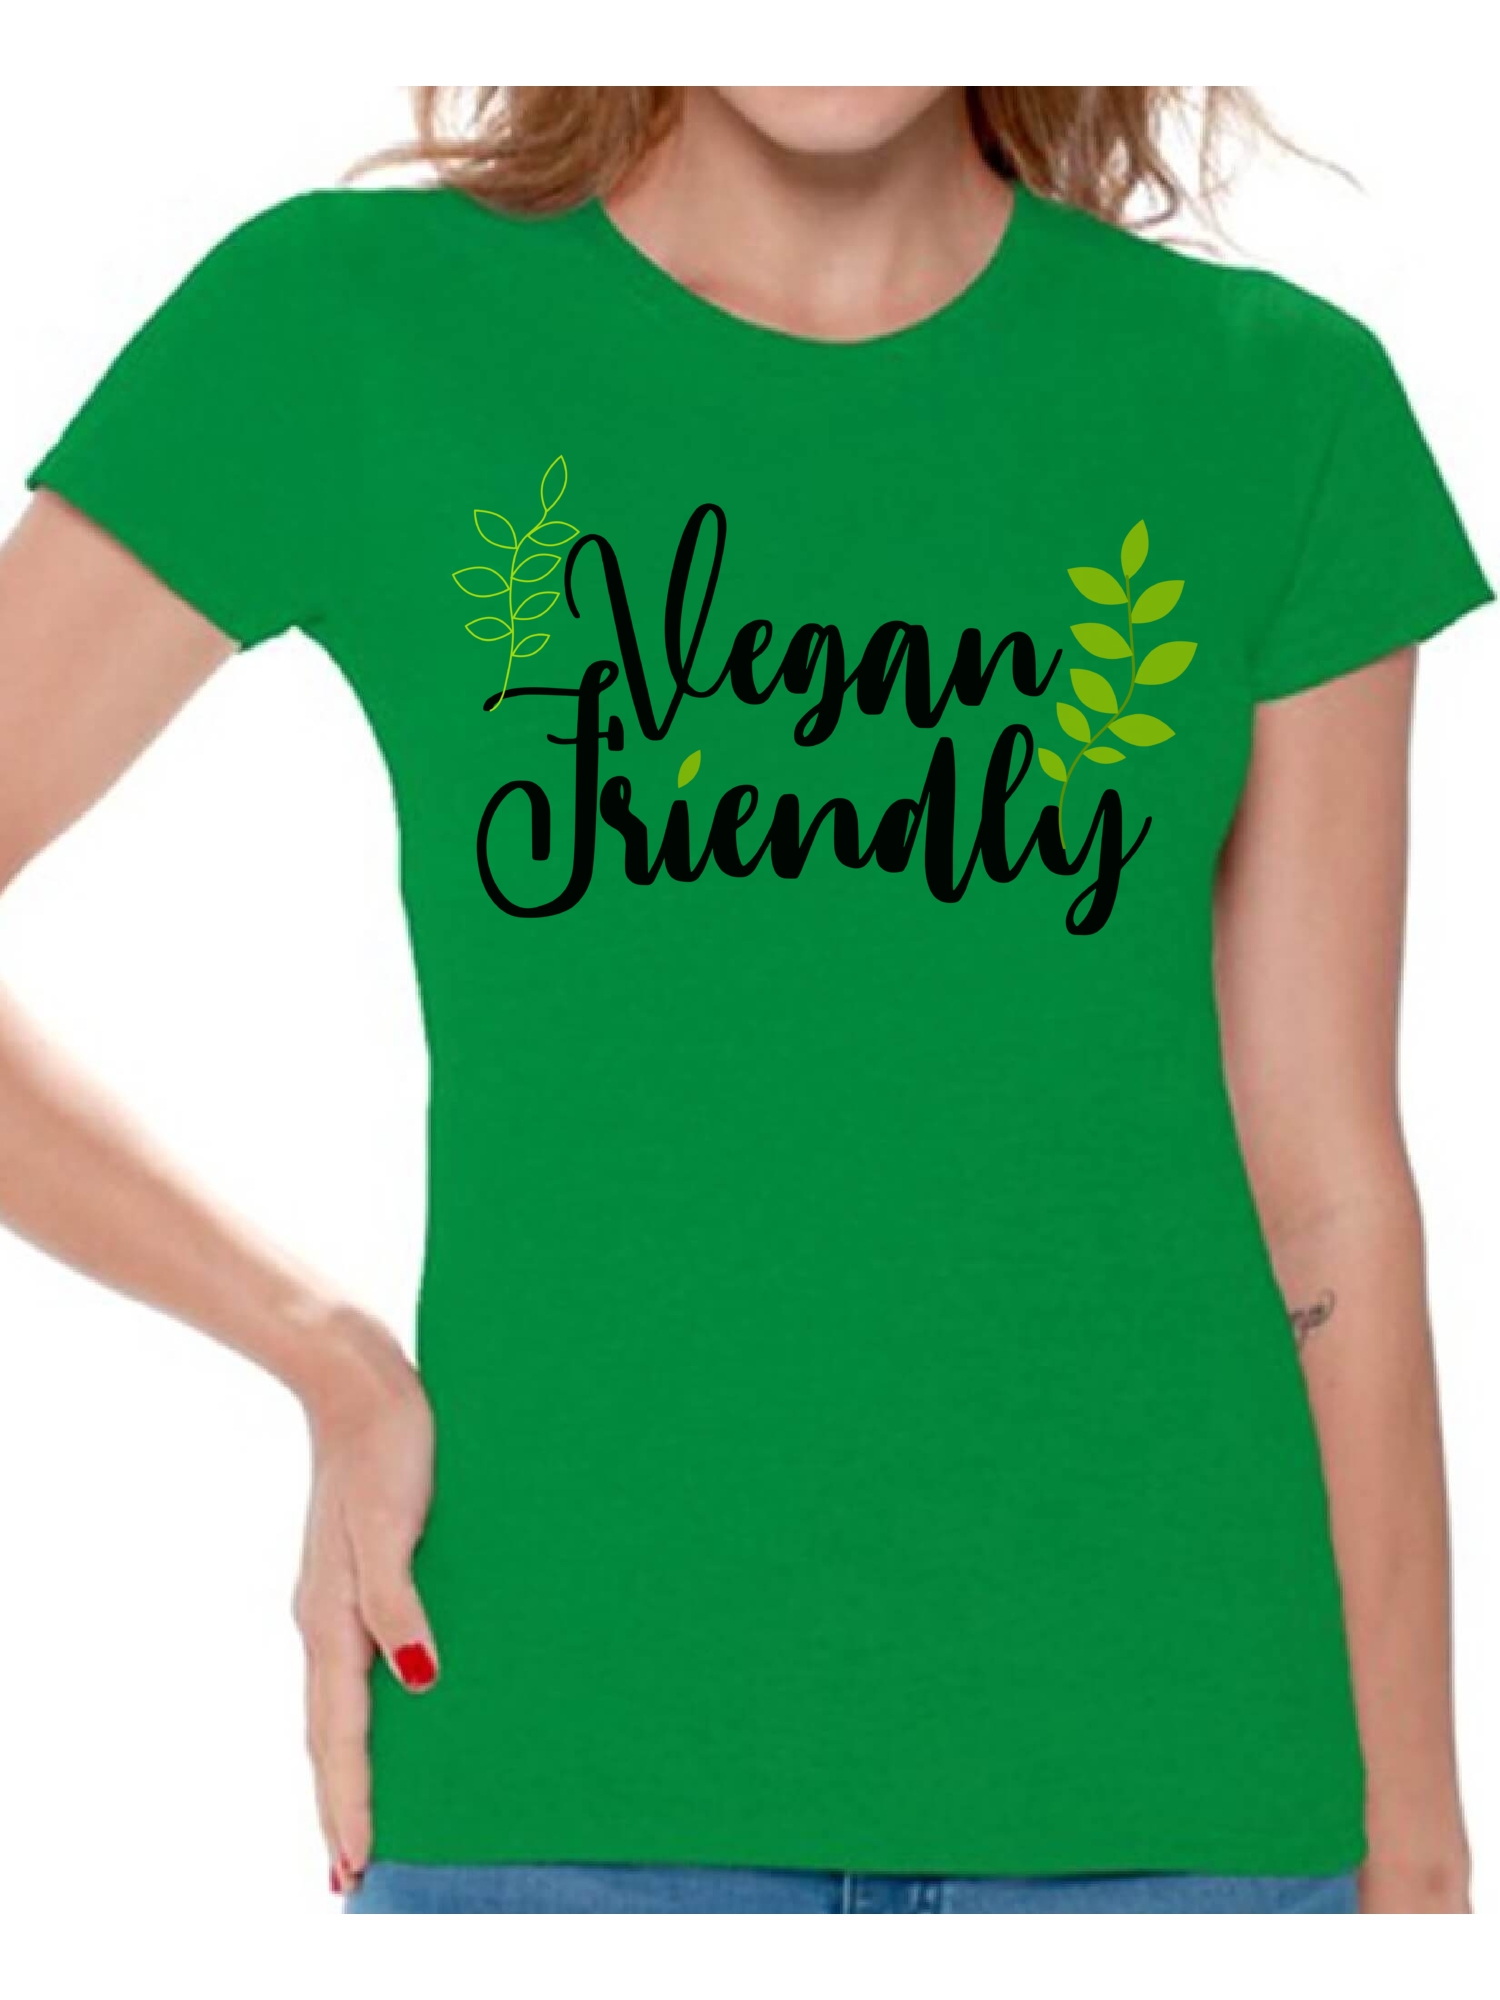 Awkward Styles Vegan Friendly Womens T-Shirt Lovely Vegetarian Tshirt Vegan Friendly Shirts for Ladies Vegan T Shirts Vegan Clothes for Women Vegan Organic Stylish Shirts for Her Gifts for Vegetarians - image 1 of 4